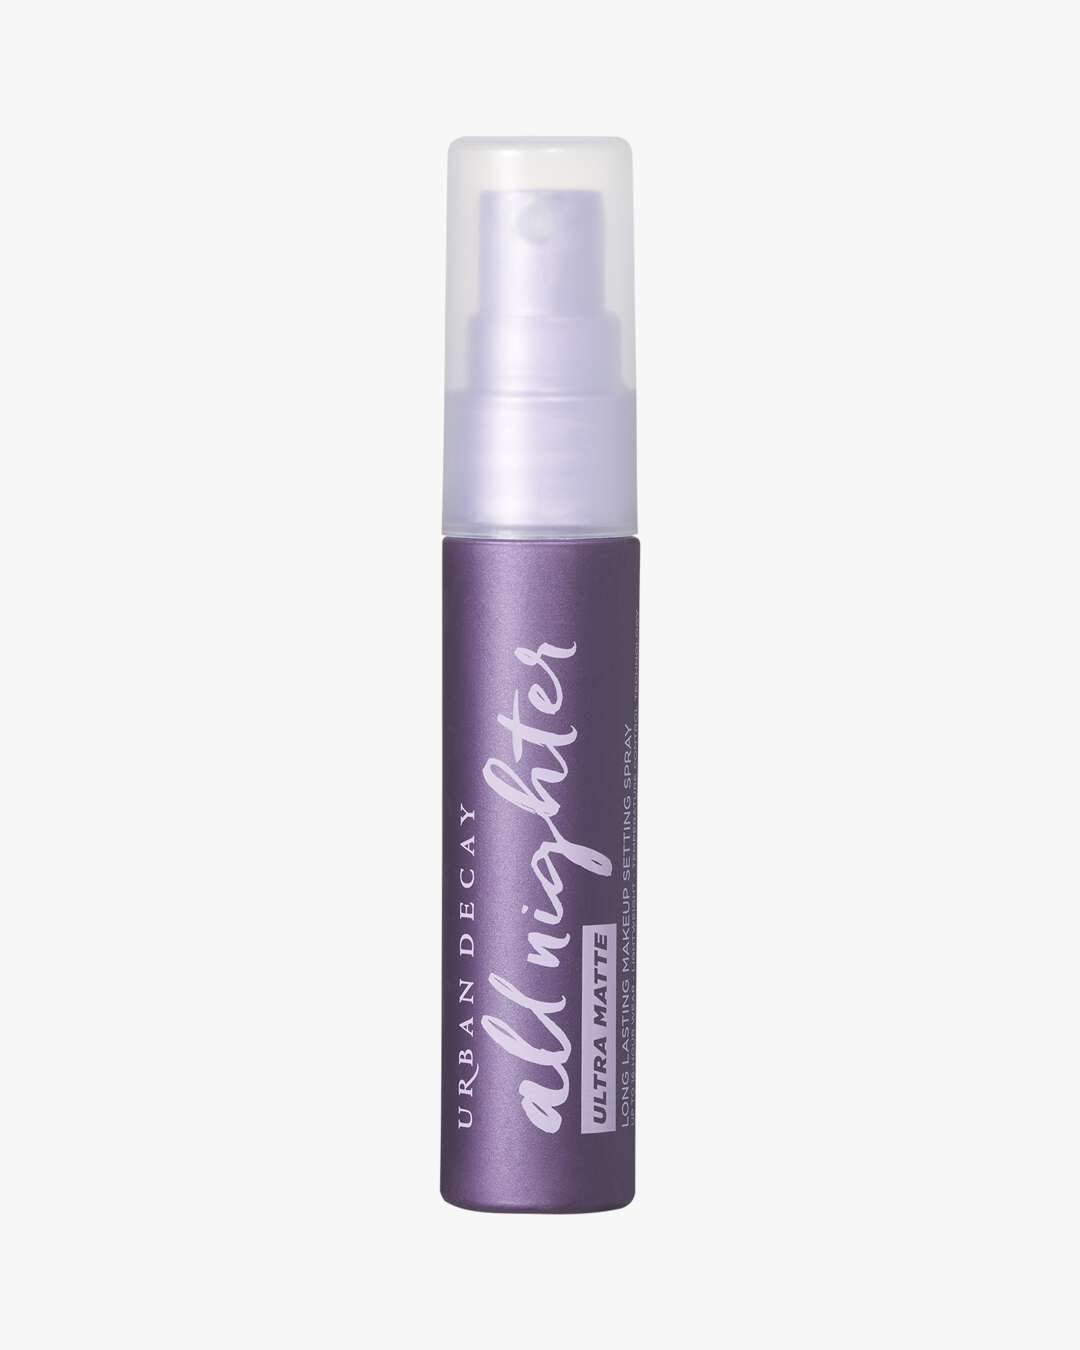 All Nighter Ultra Matte Makeup Setting Spray Travel Size 30 ml